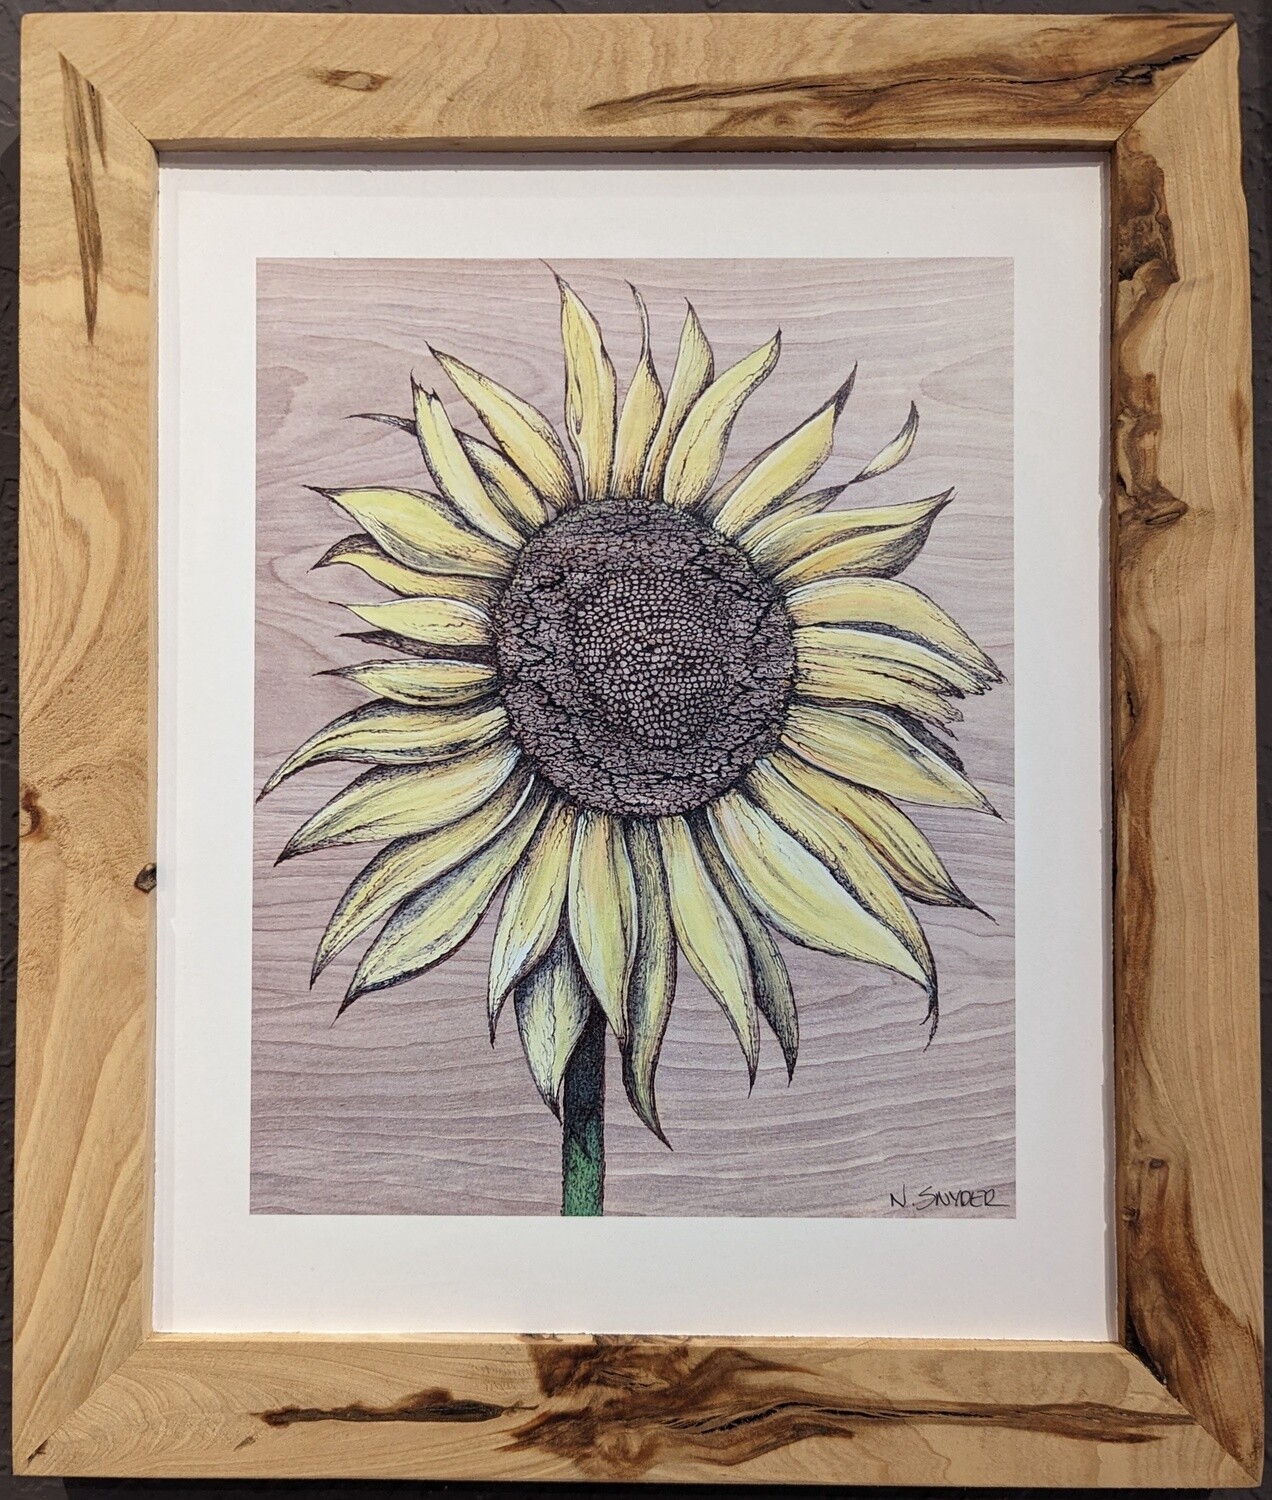 "The Sunflower"